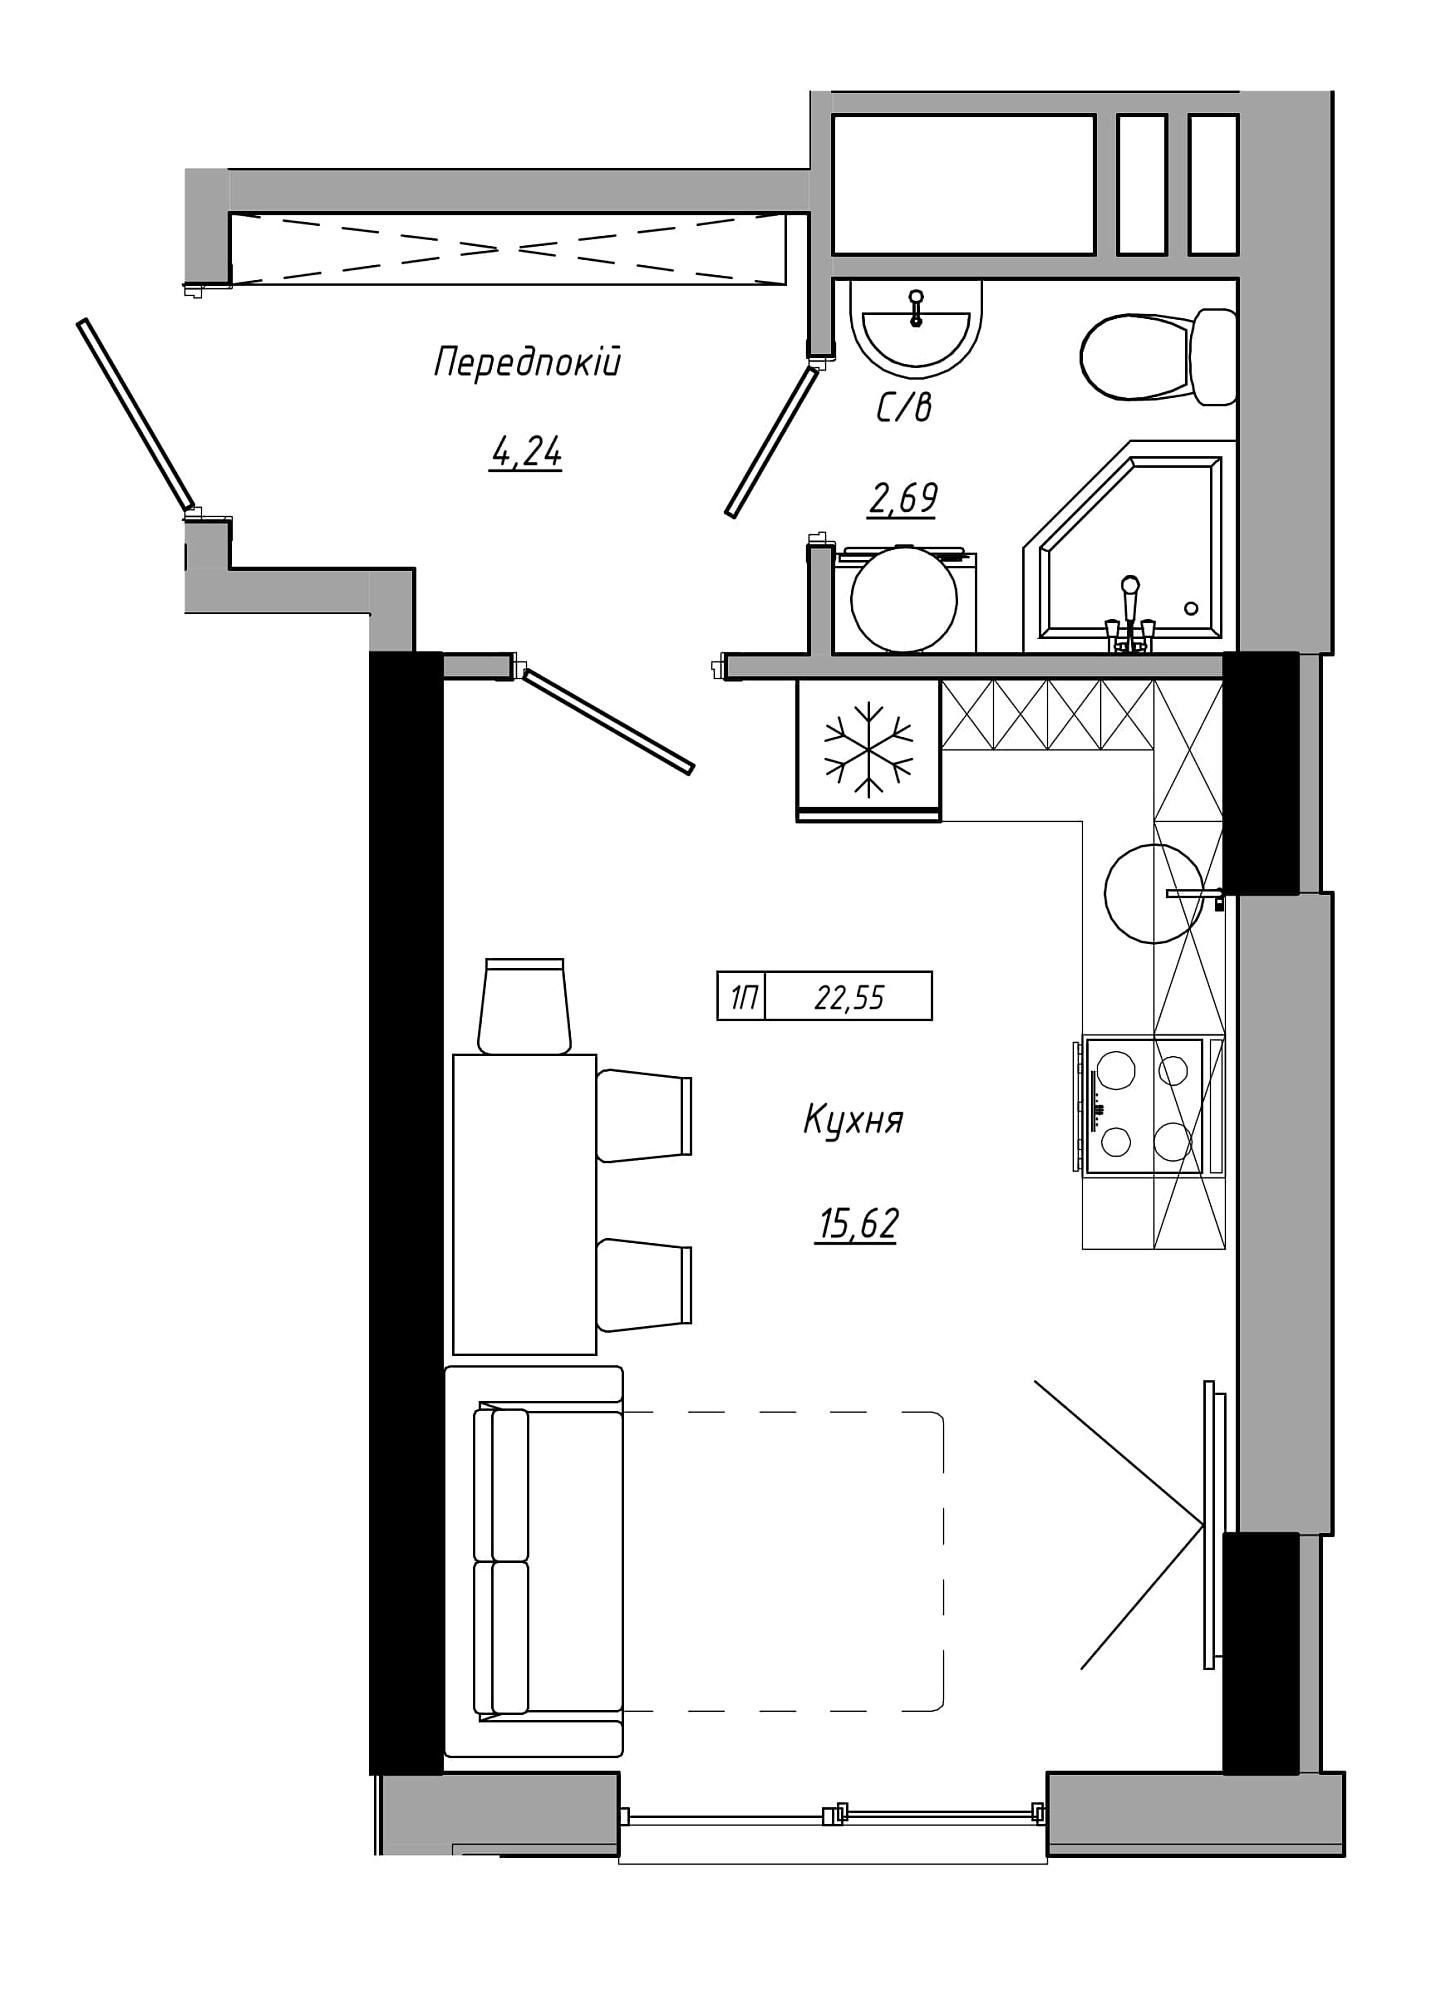 Planning Smart flats area 22.55m2, AB-21-05/00018.